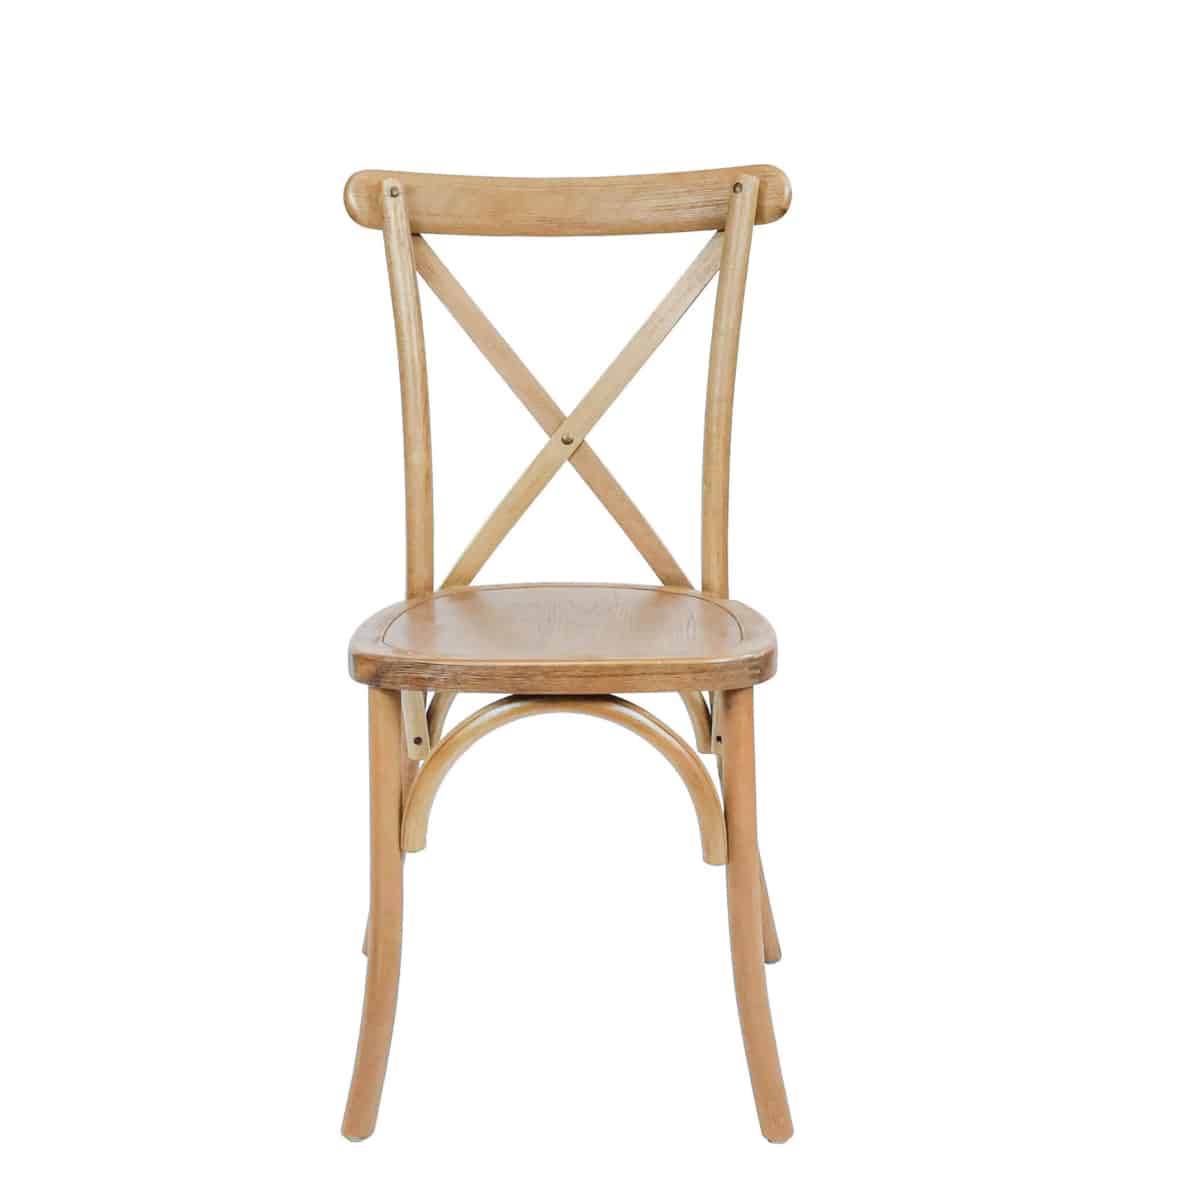 Refrein Toestand charme Cross back stapelstoelen elm wood - Super Seat